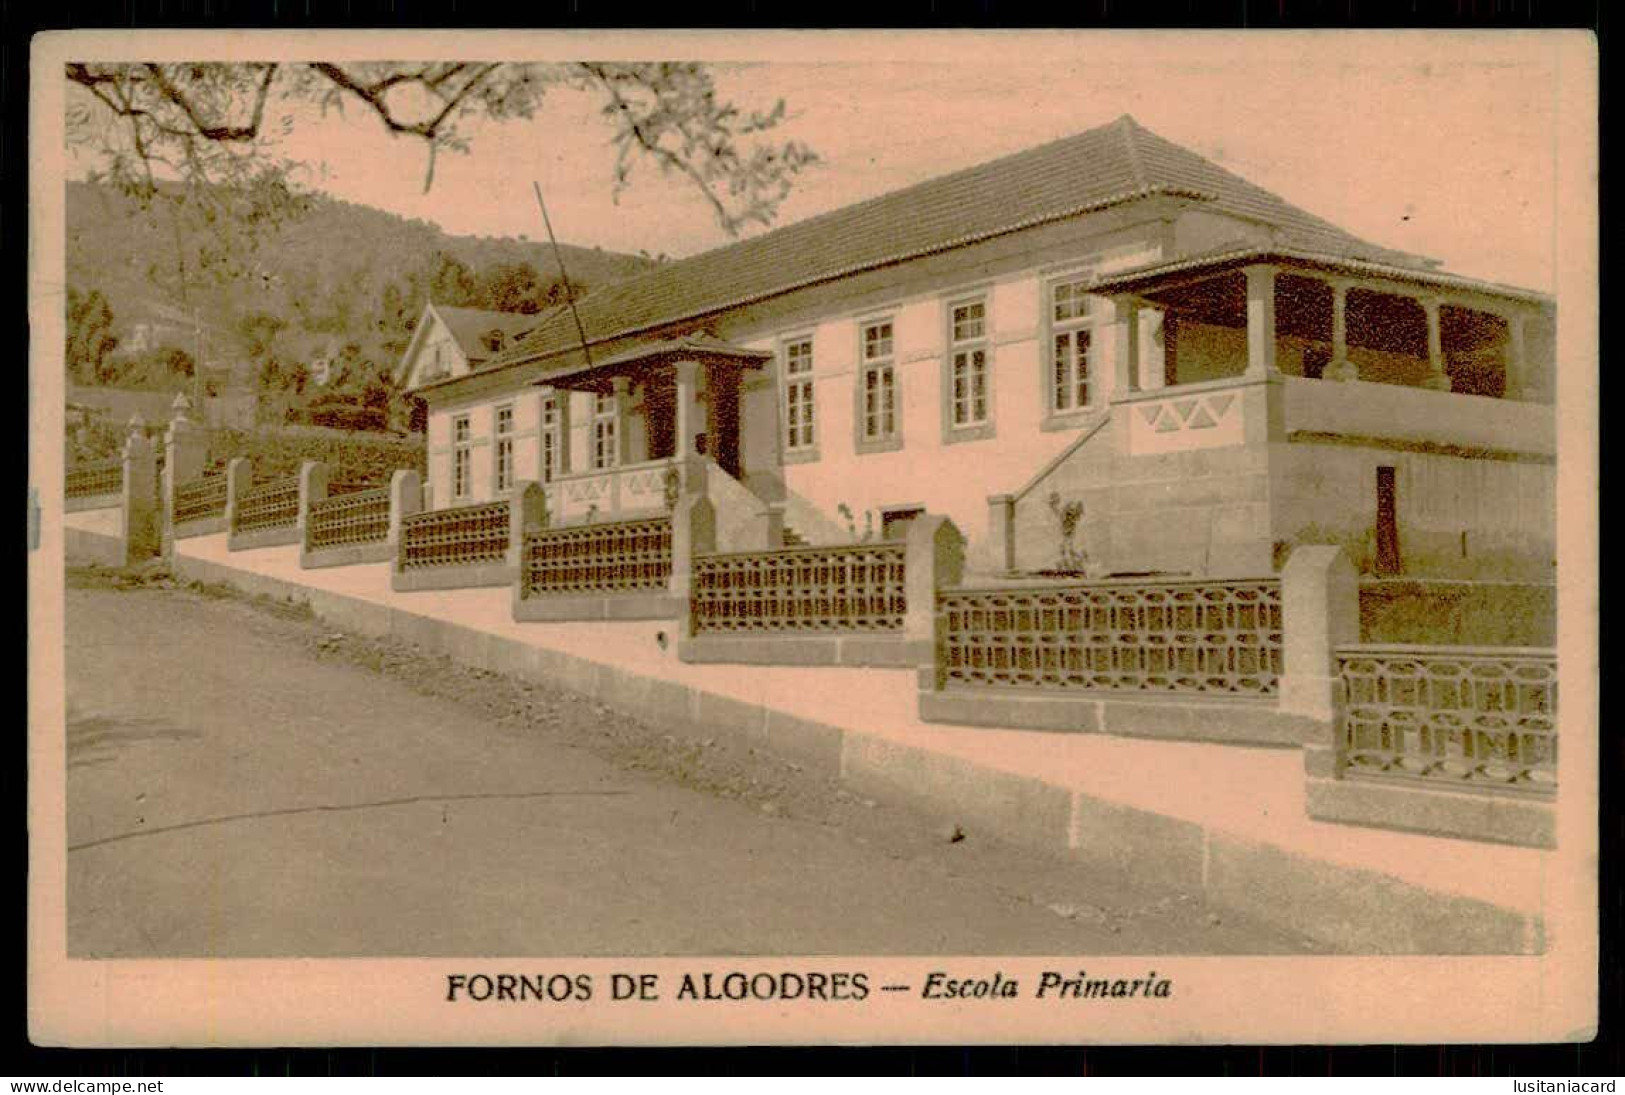 FORNOS DE ALGODRES - ESCOLAS - Escola Primaria.( Ed. Ocogravura Lda. ) Carte Postale - Guarda